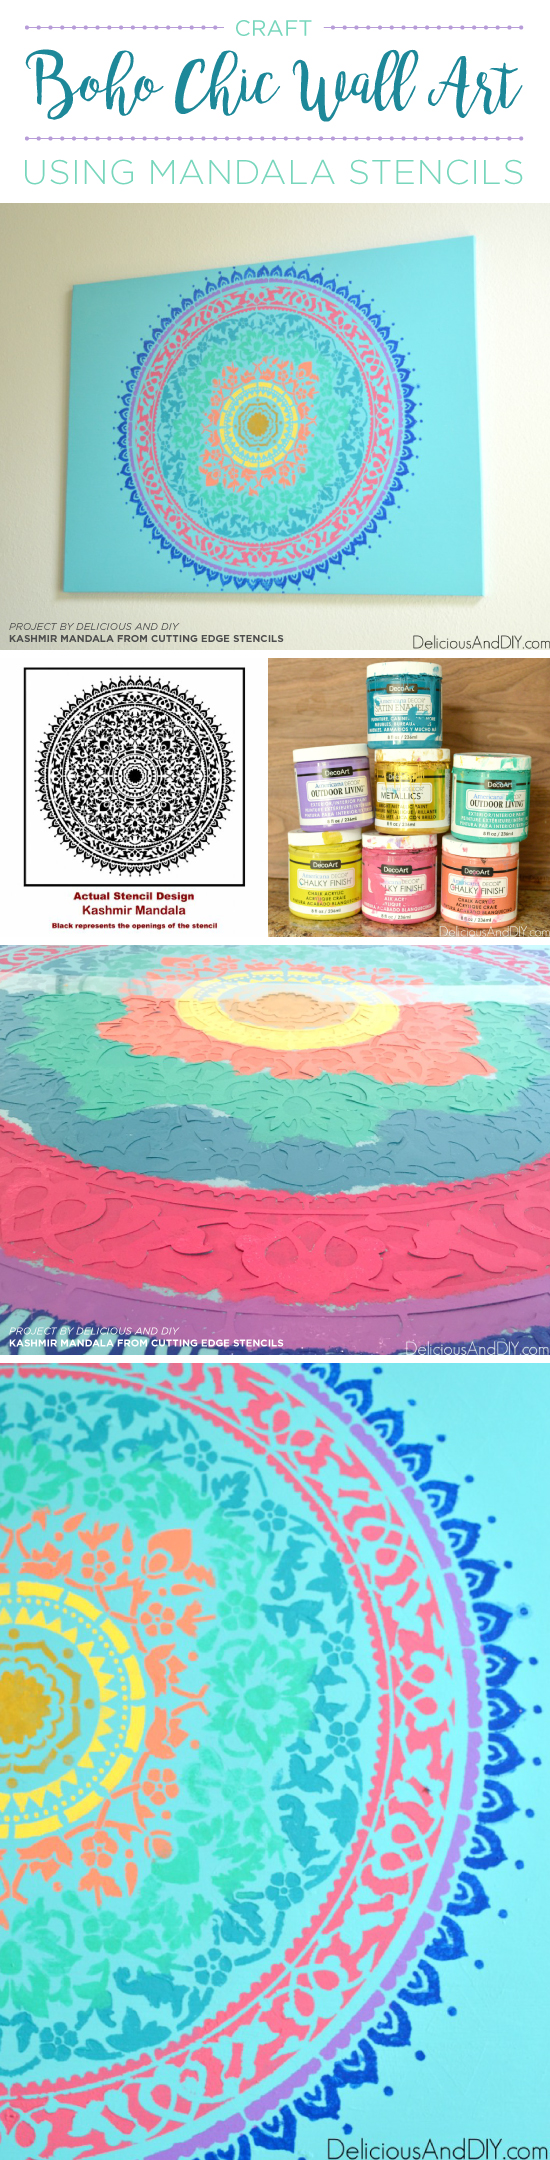 Cutting Edge Stencils shares how to craft boho chic wall art using the Kashmir Mandala stencil pattern. http://www.cuttingedgestencils.com/mandala-stencil-design-kashmir-yoga-decal.html